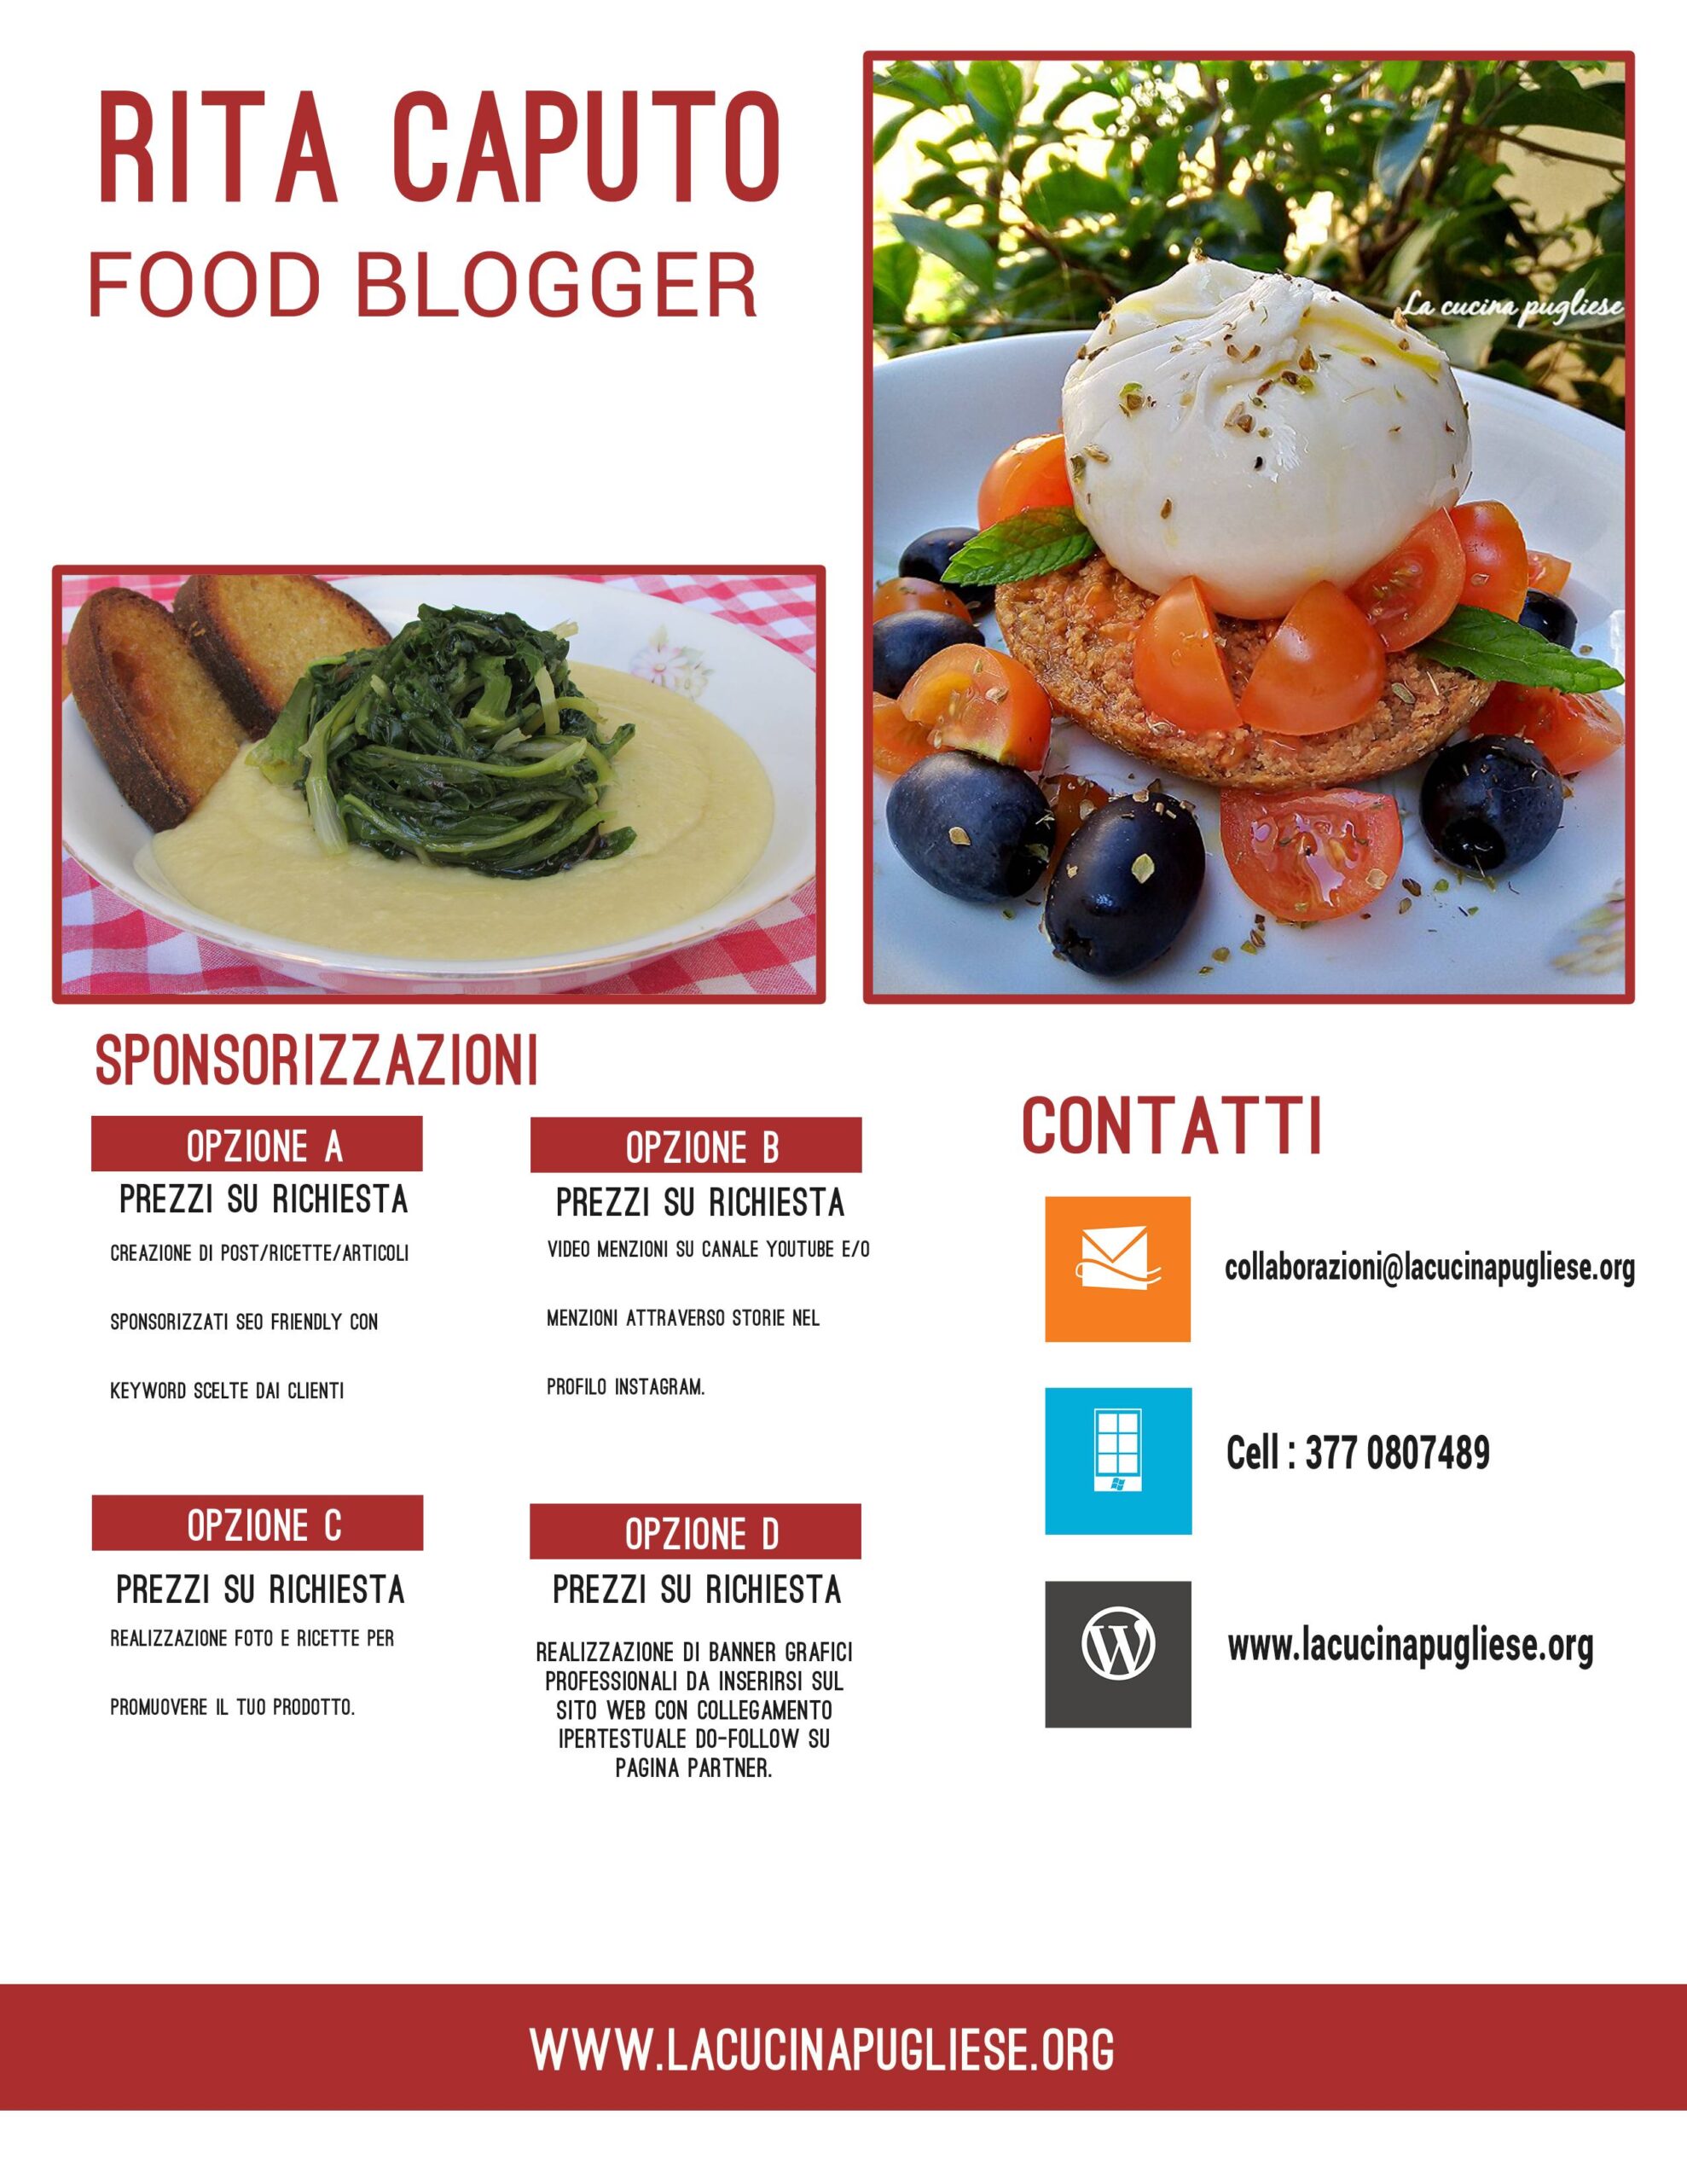 MediaKit La Cucina Pugliese di Rita Caputo Food Blogger Puglia